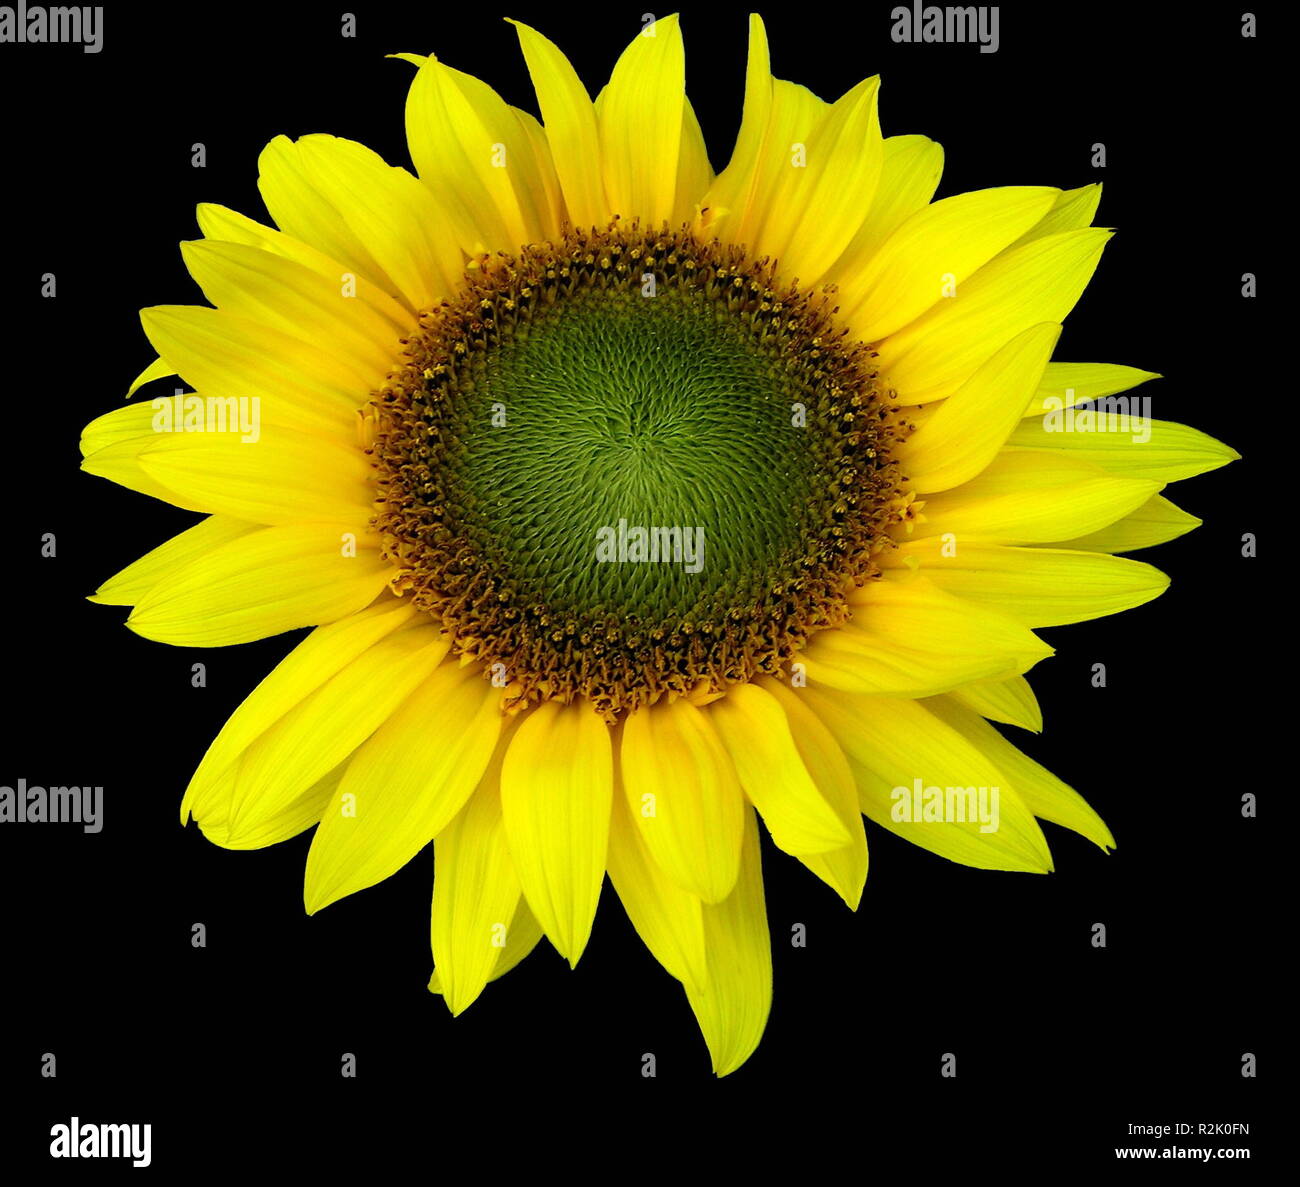 exempted sunflower Stock Photo